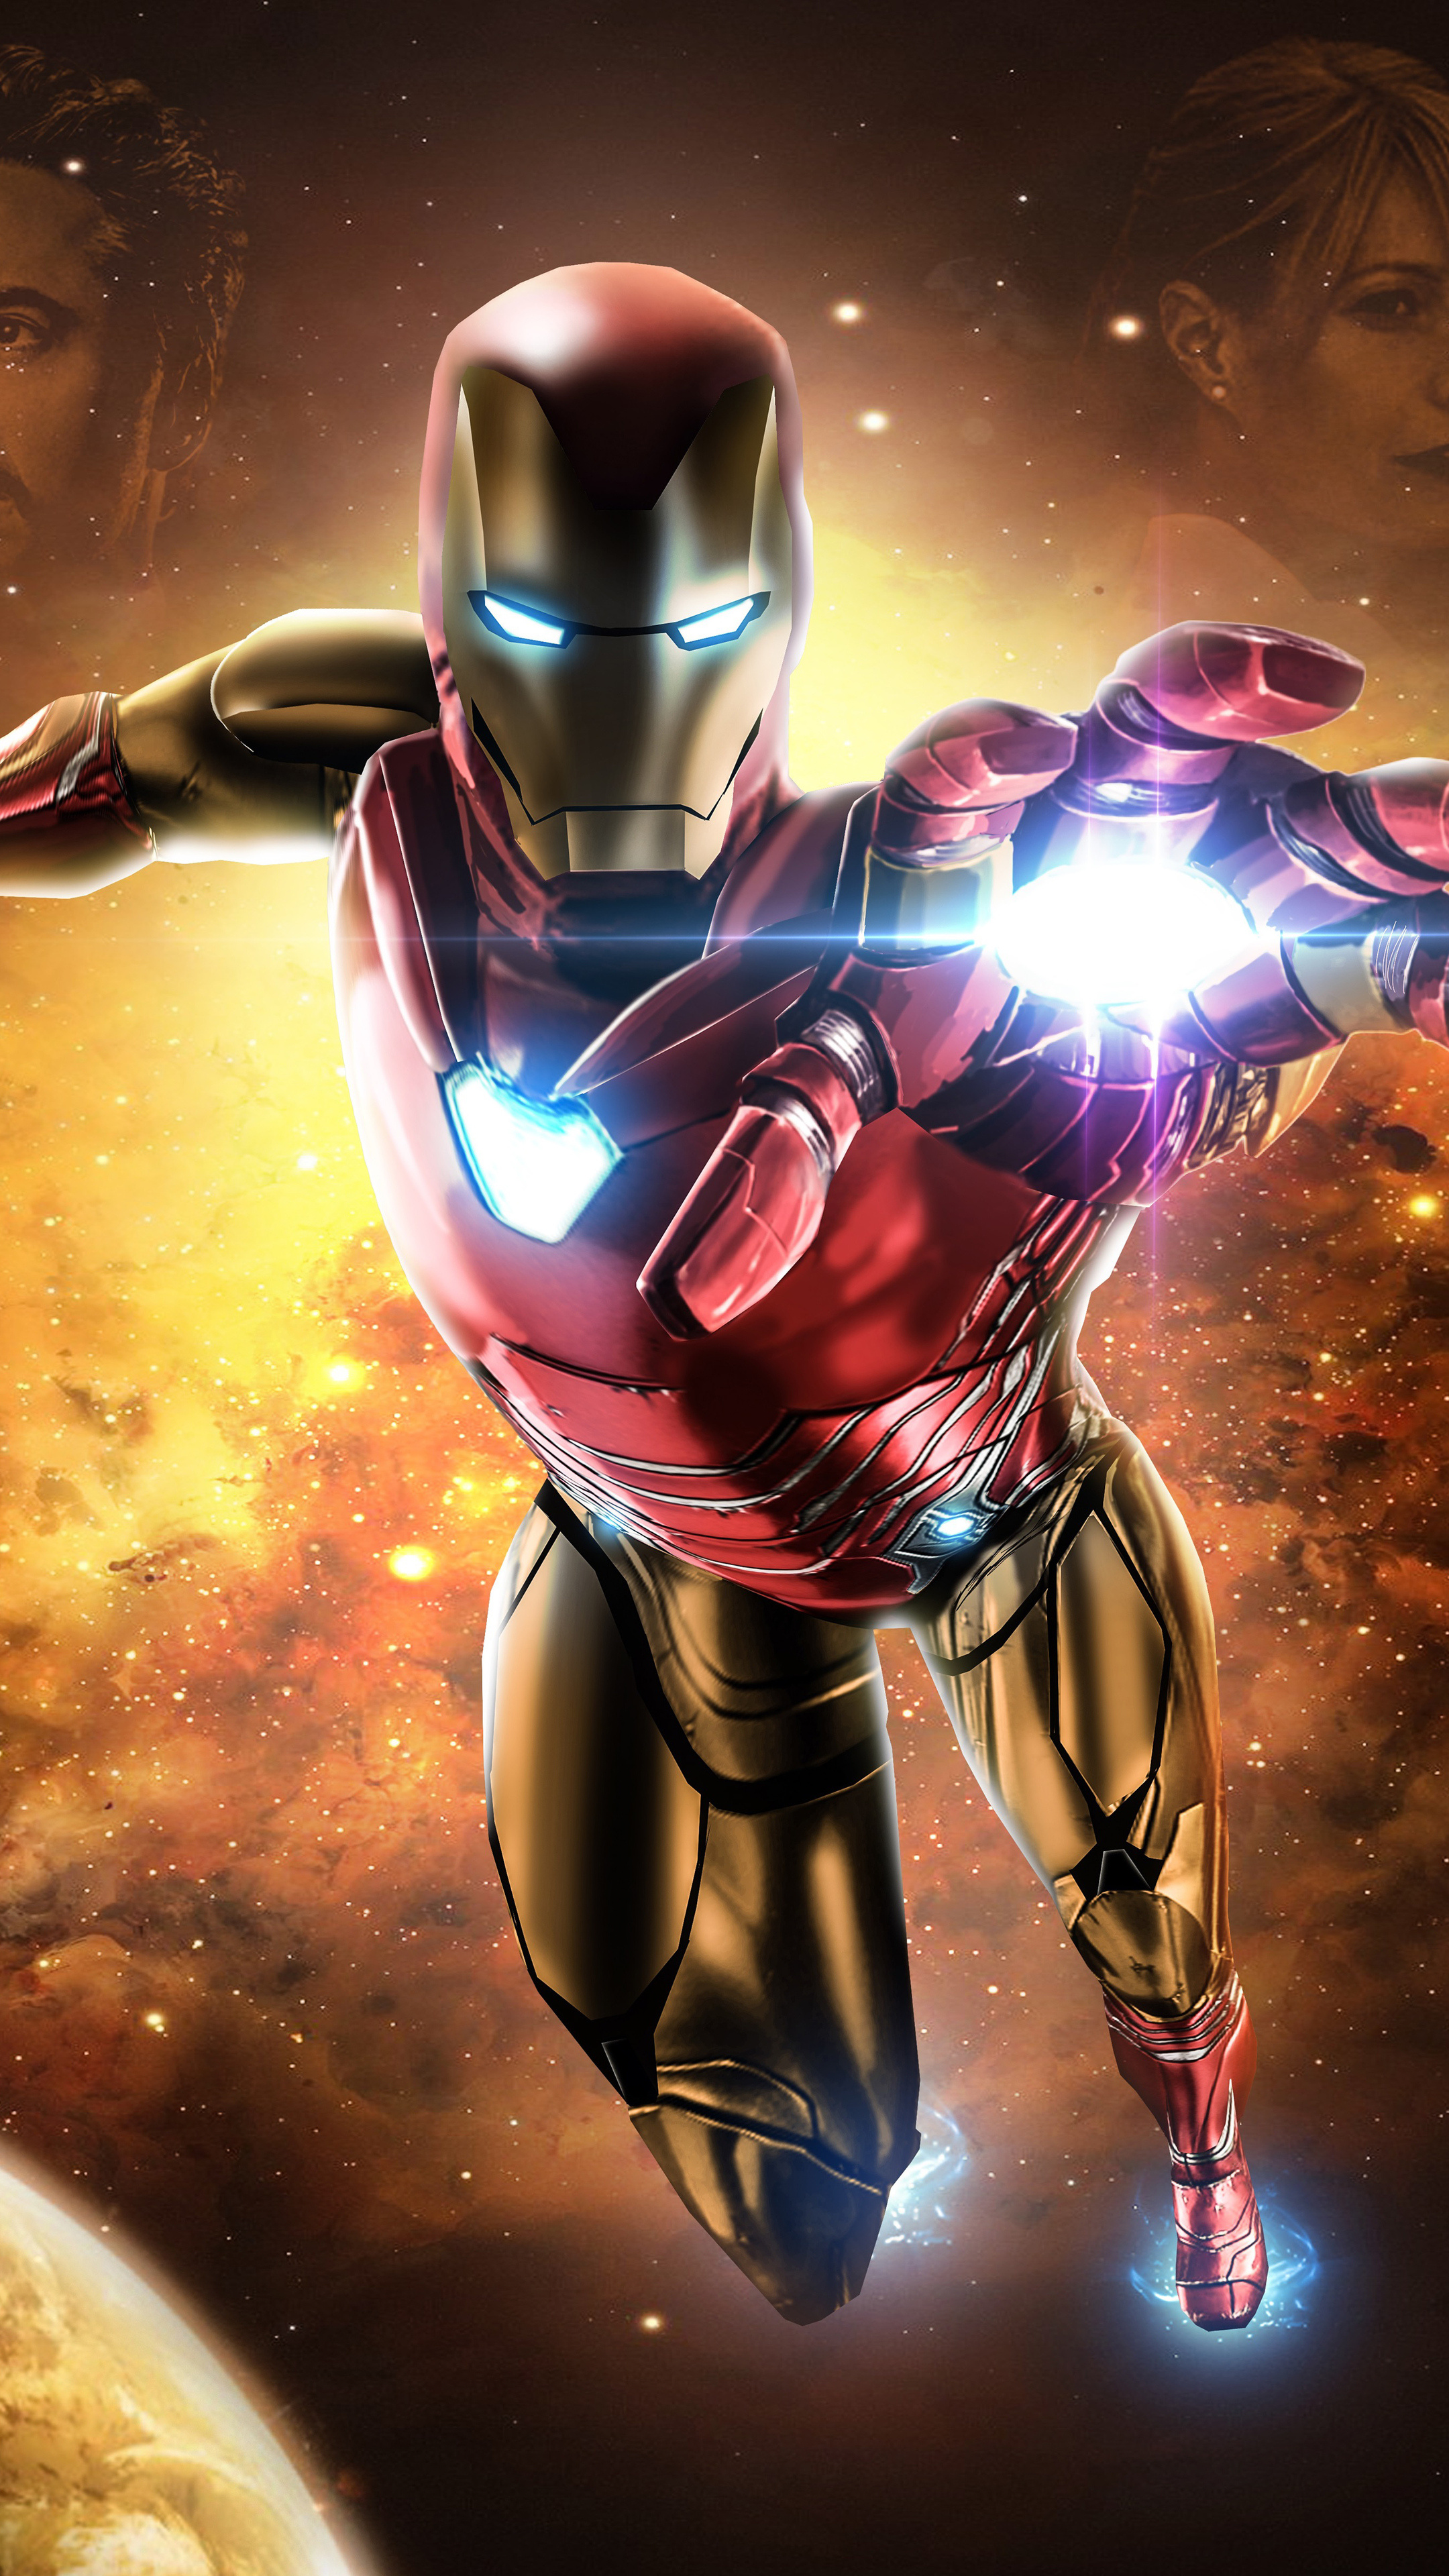 Iron Man, Mark 45 armor, 4K resolution, Superhero wallpaper, 2160x3840 4K Phone